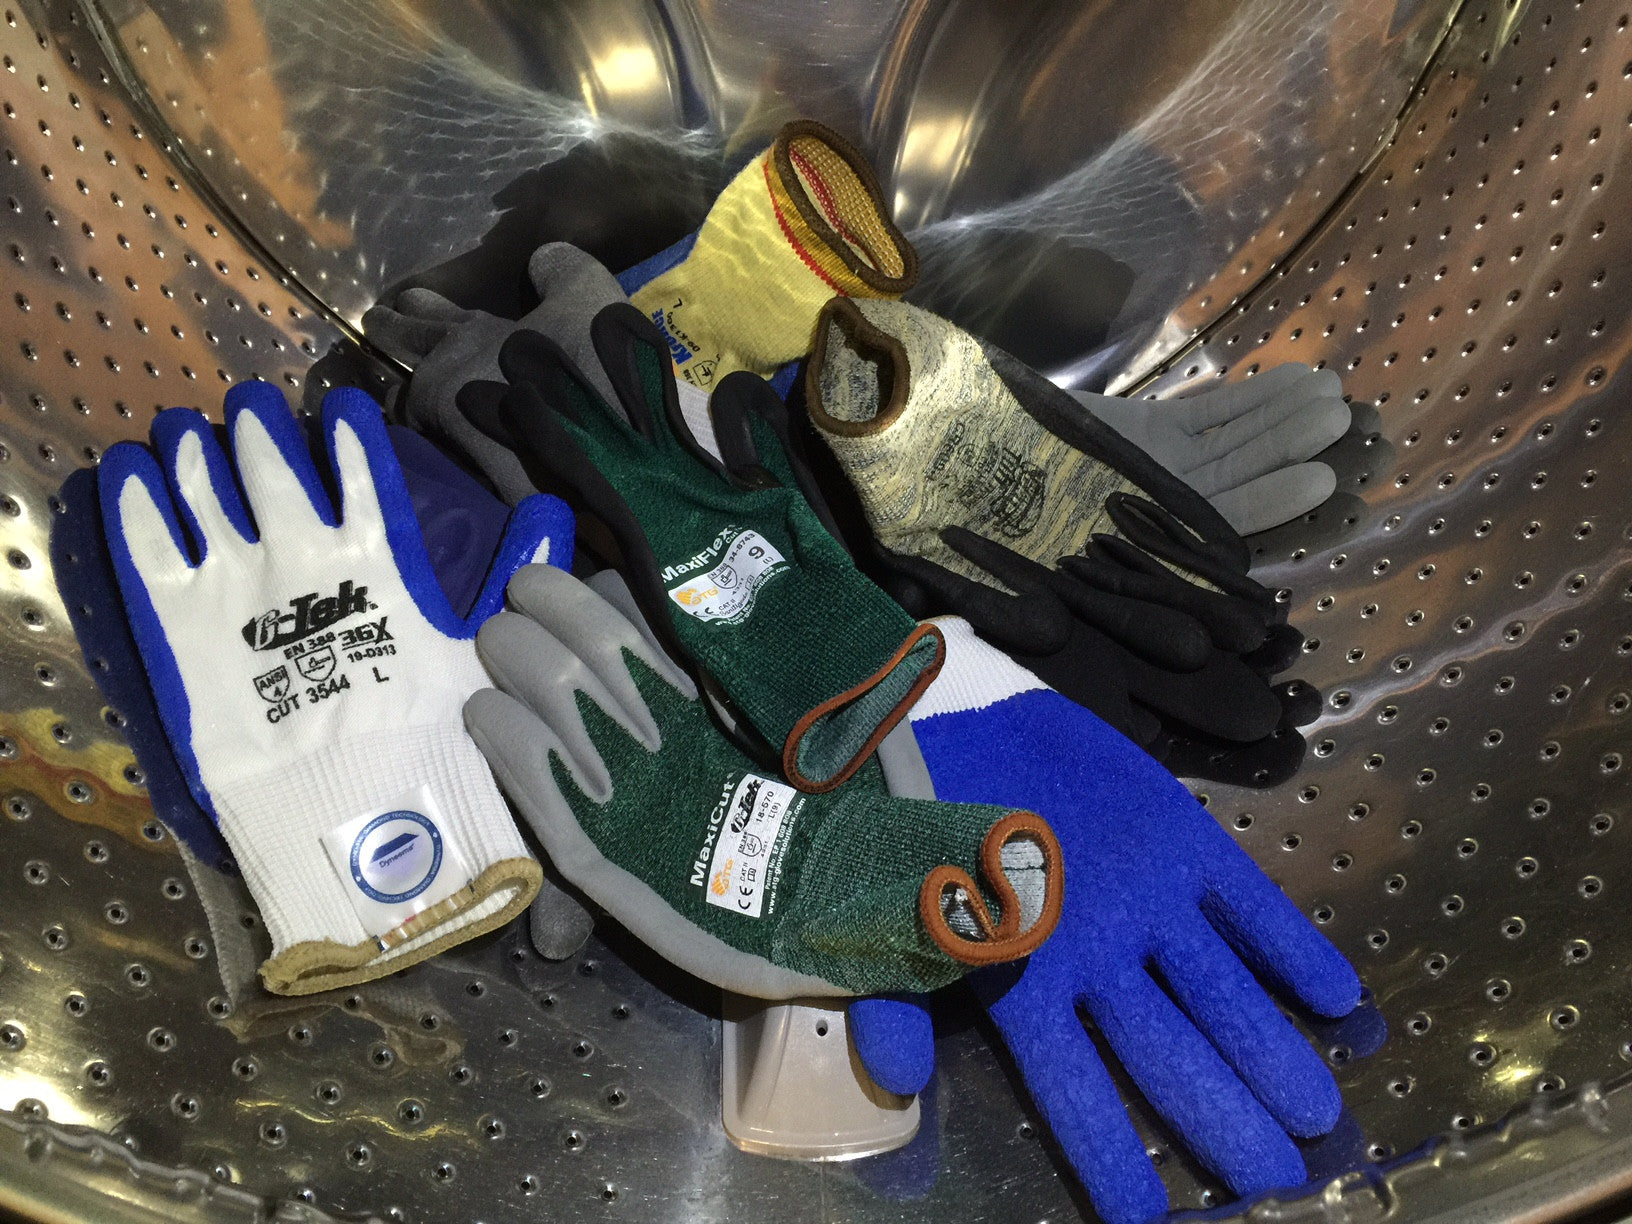 Bellingham Grey Premium Insulated Work Gloves, Large